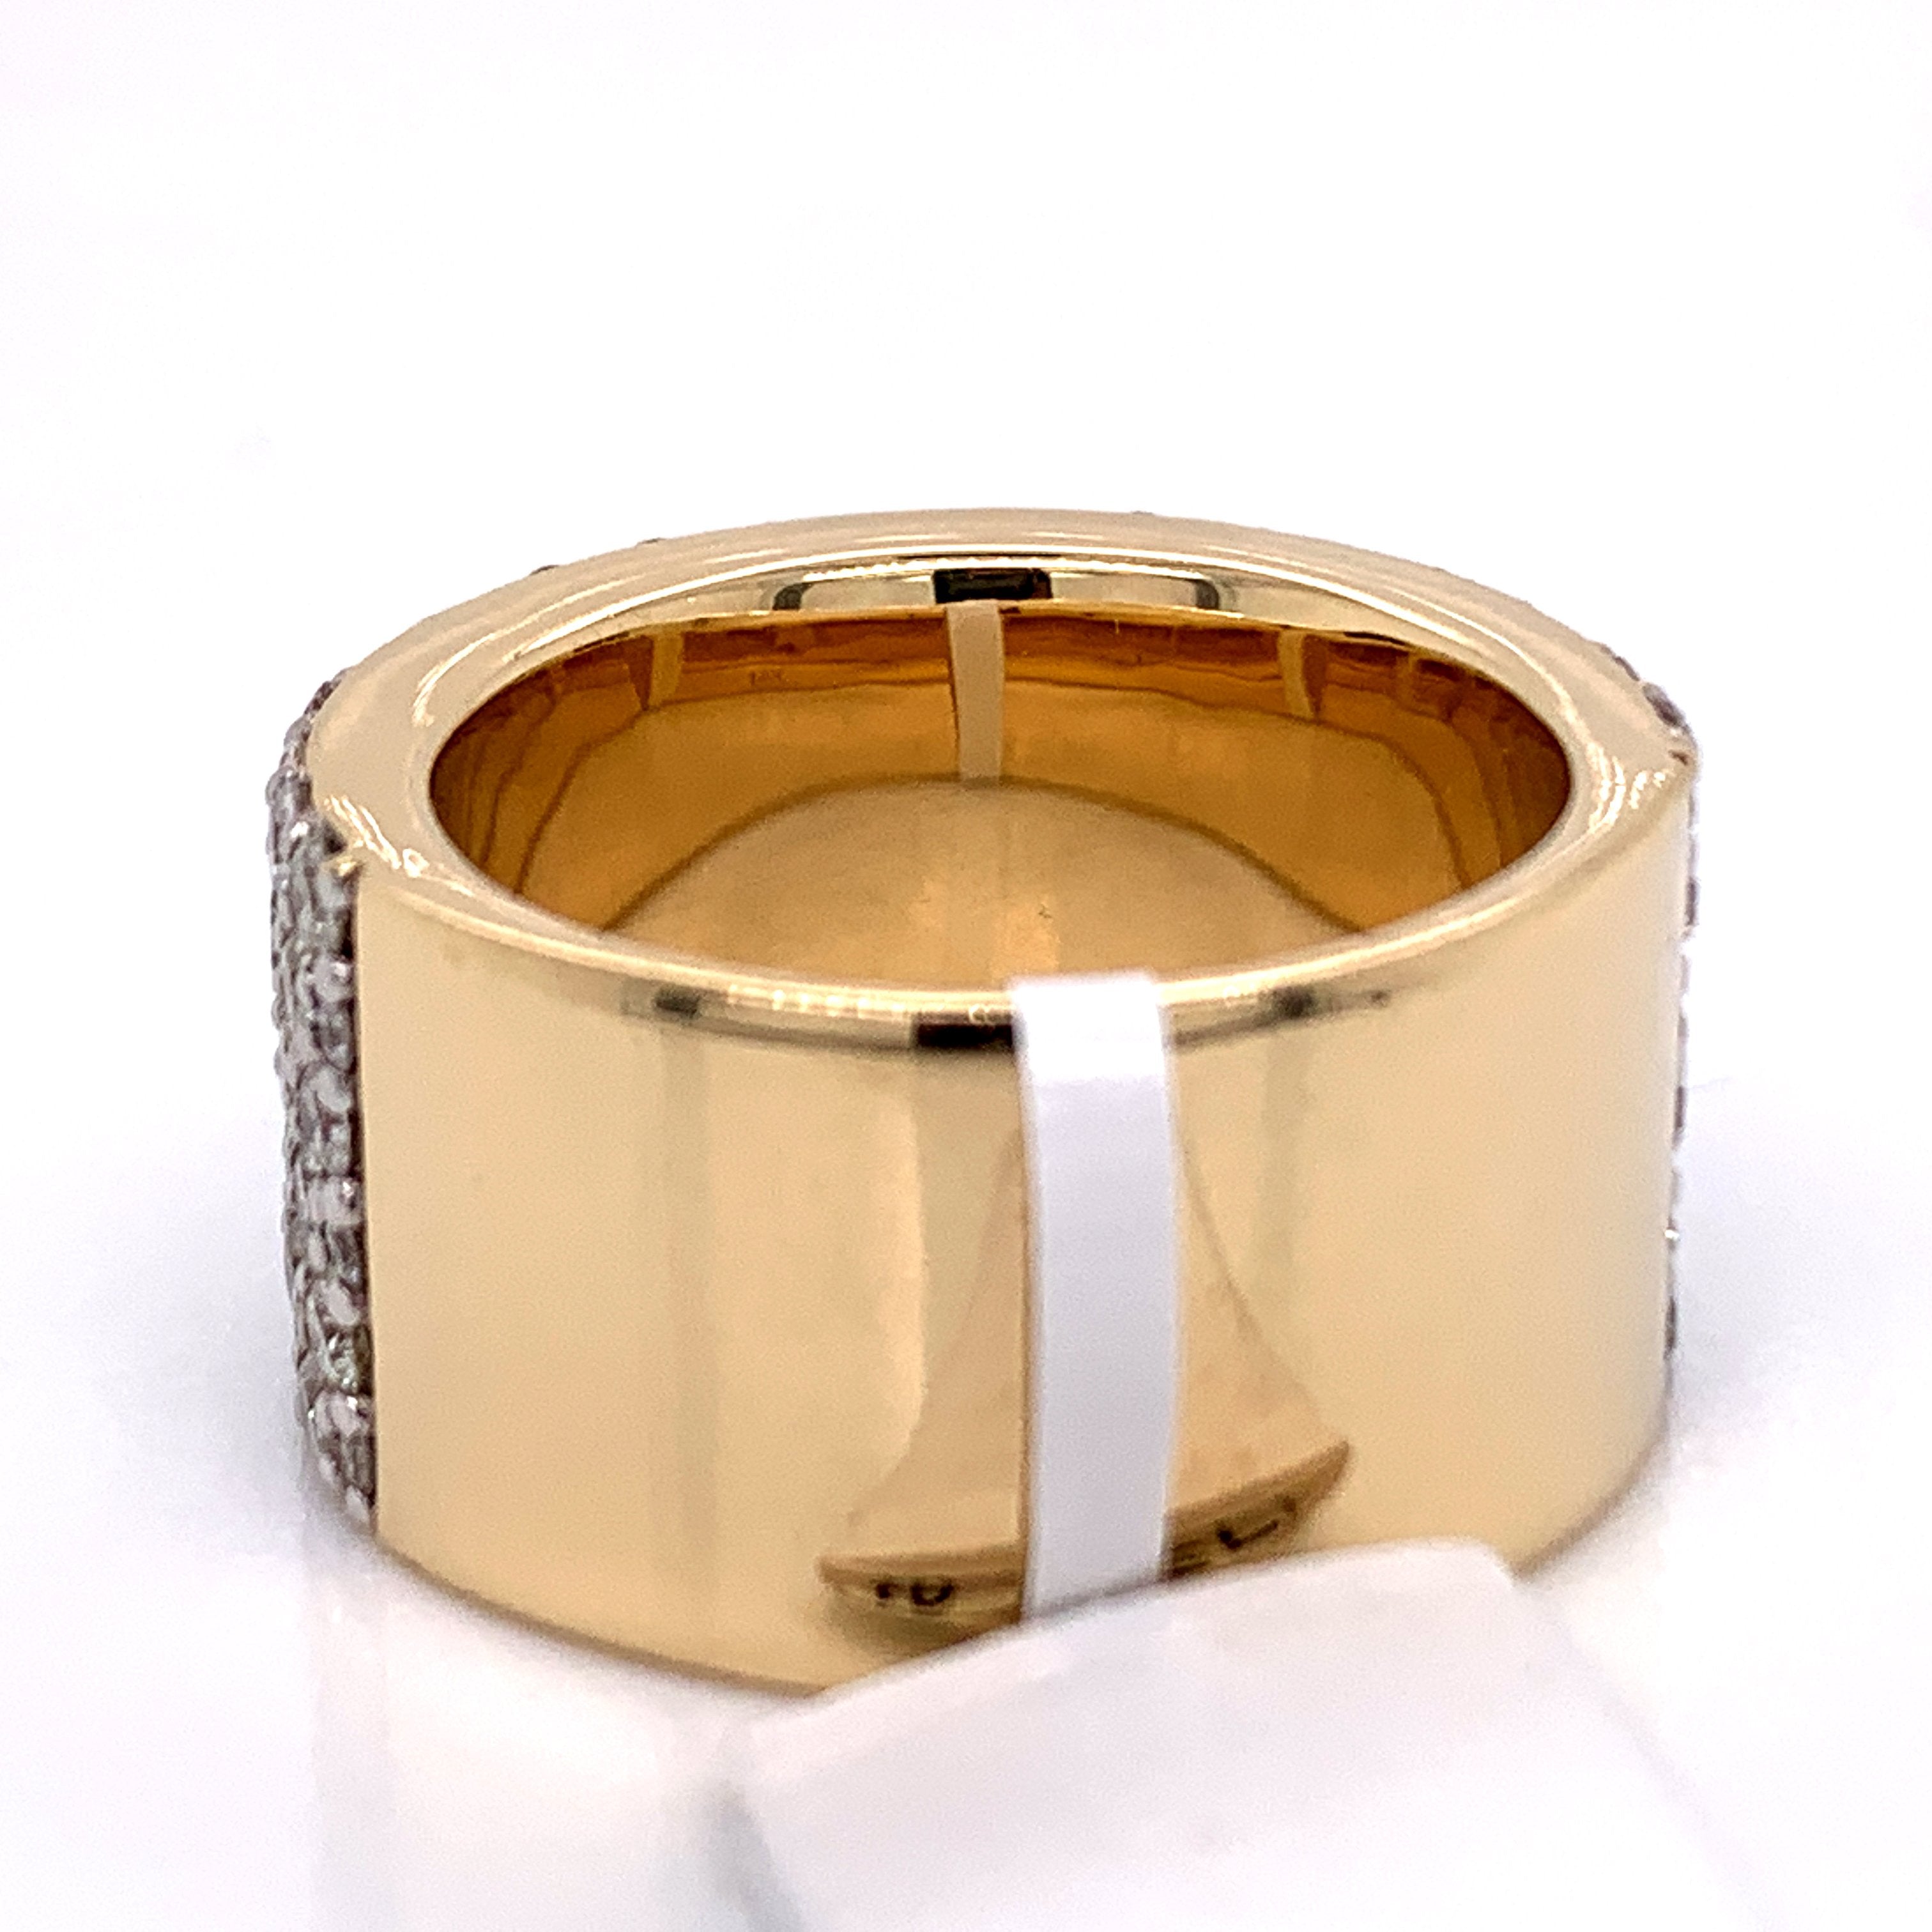 5.00 CT. Diamond Ring in 10K Gold - White Carat Diamonds 